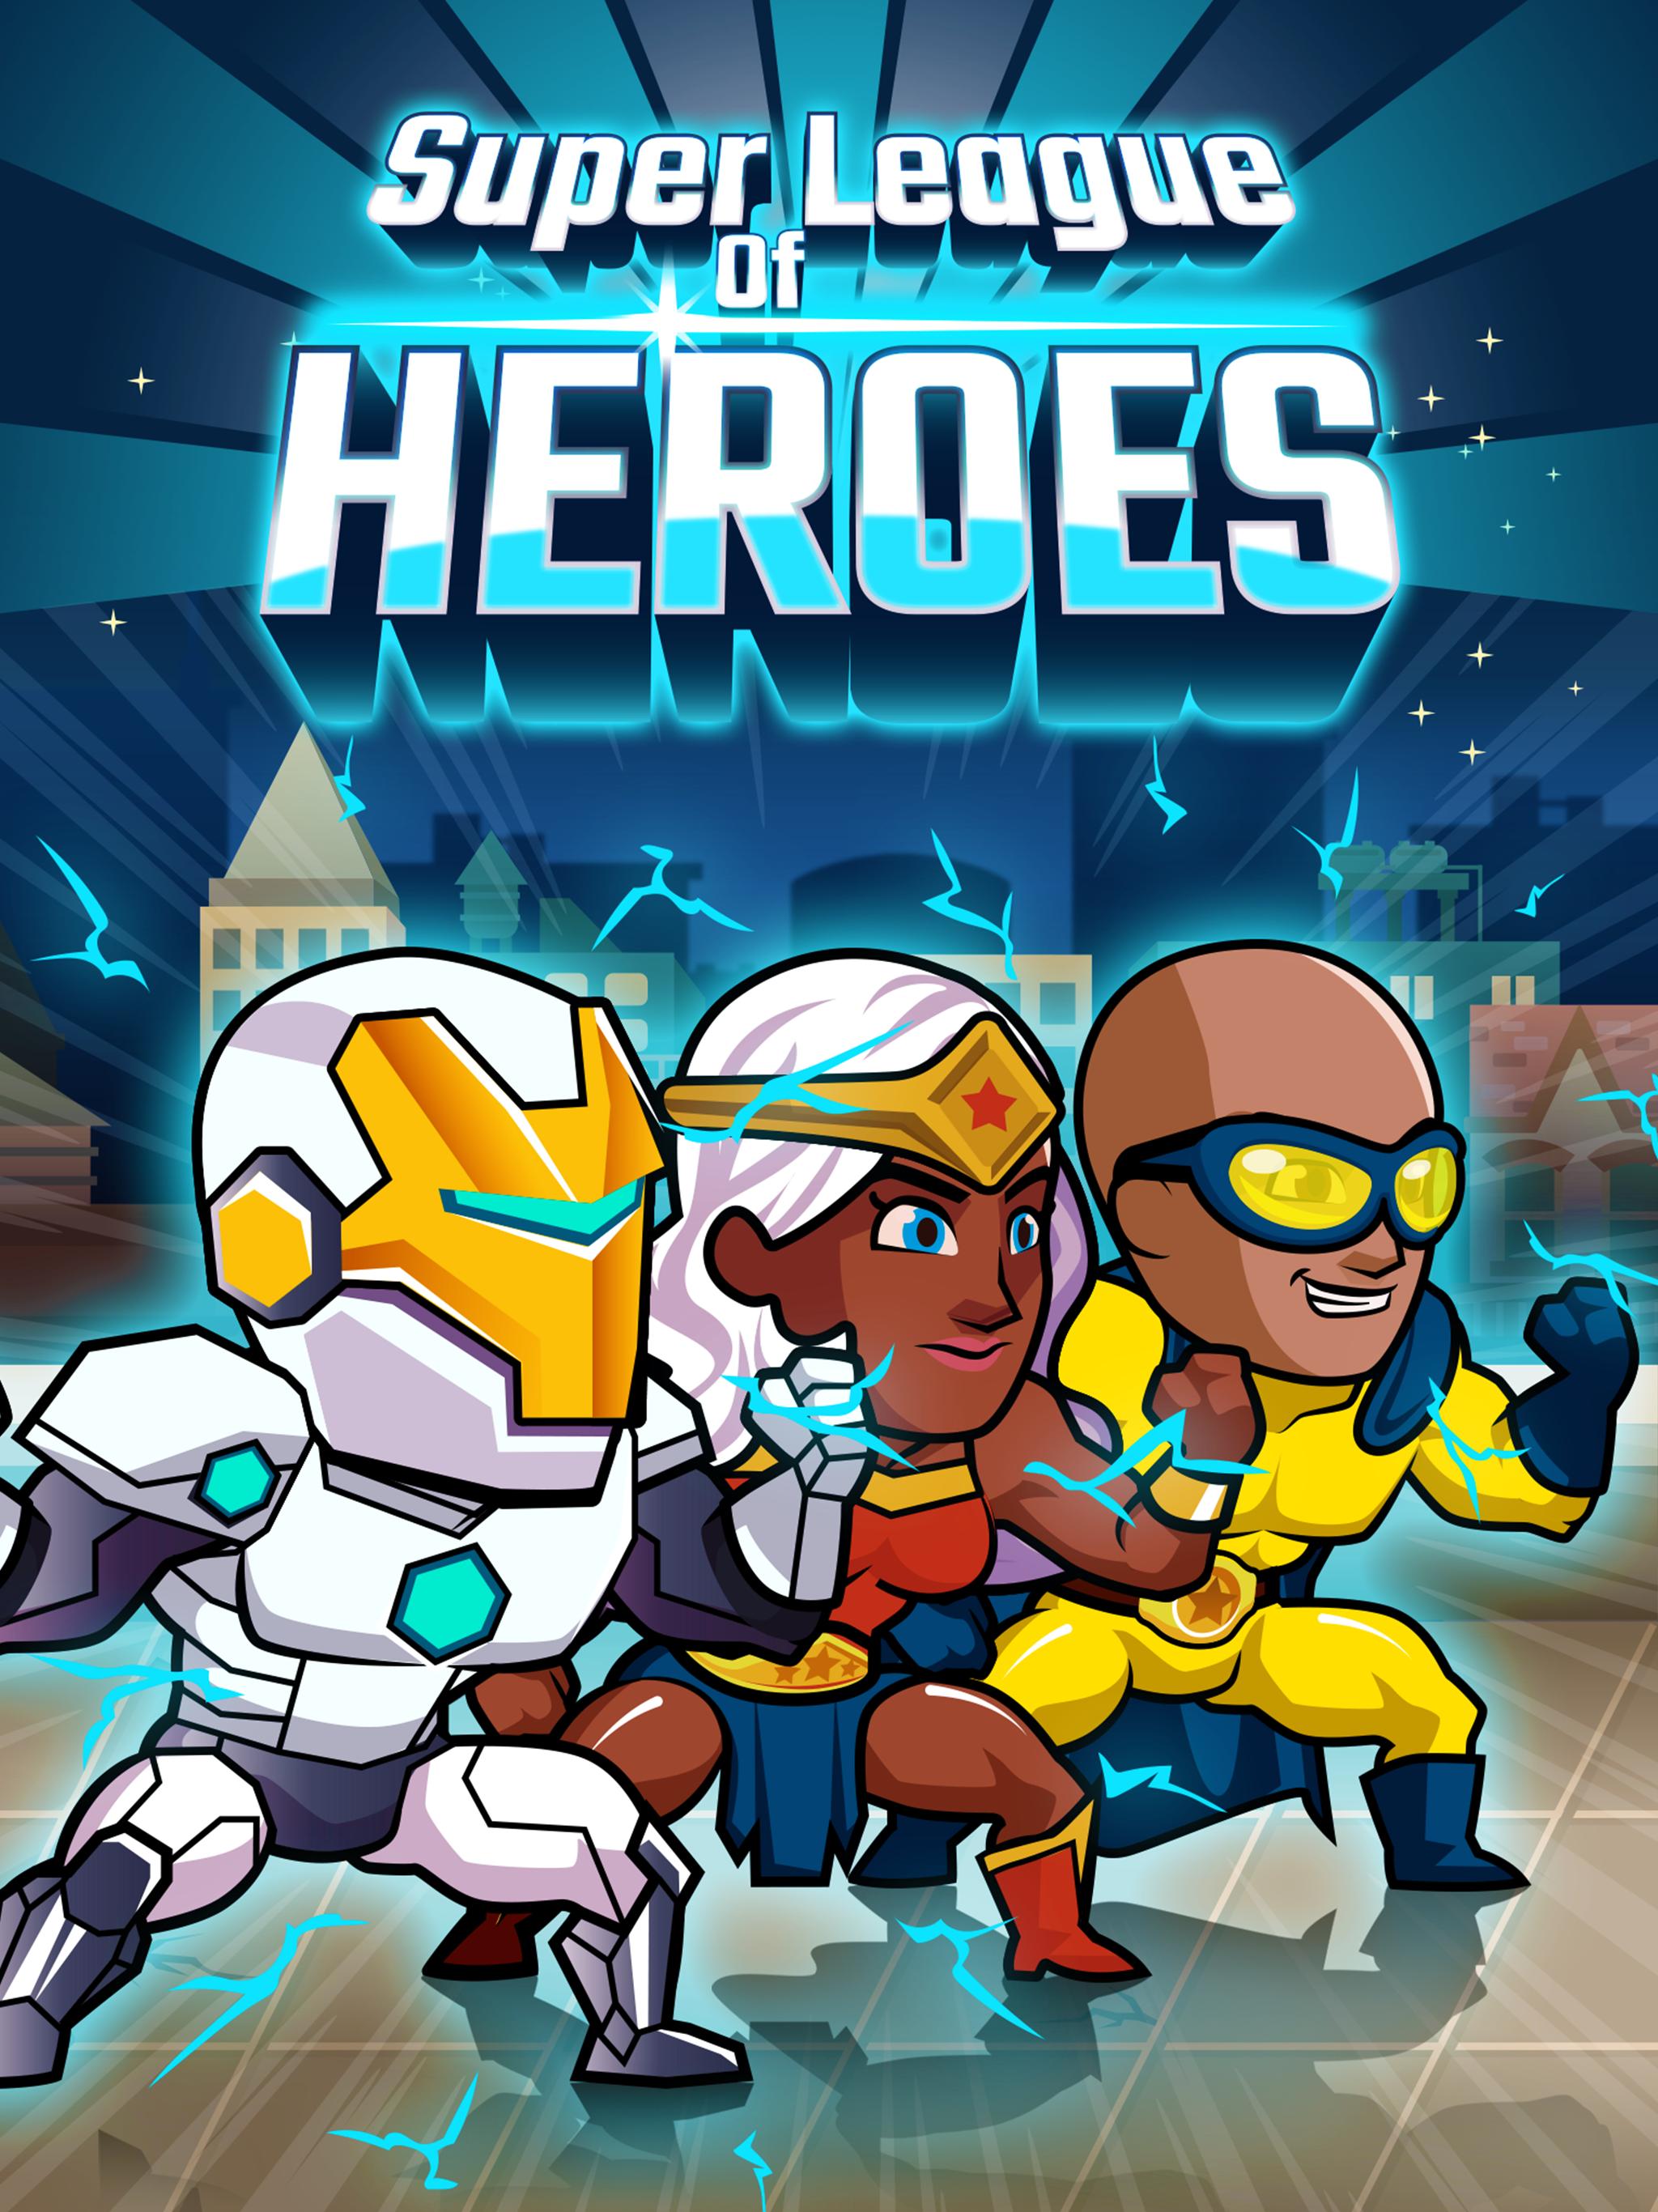 Super League of Heroes - Comic Book Champions 1.0.7 Screenshot 11